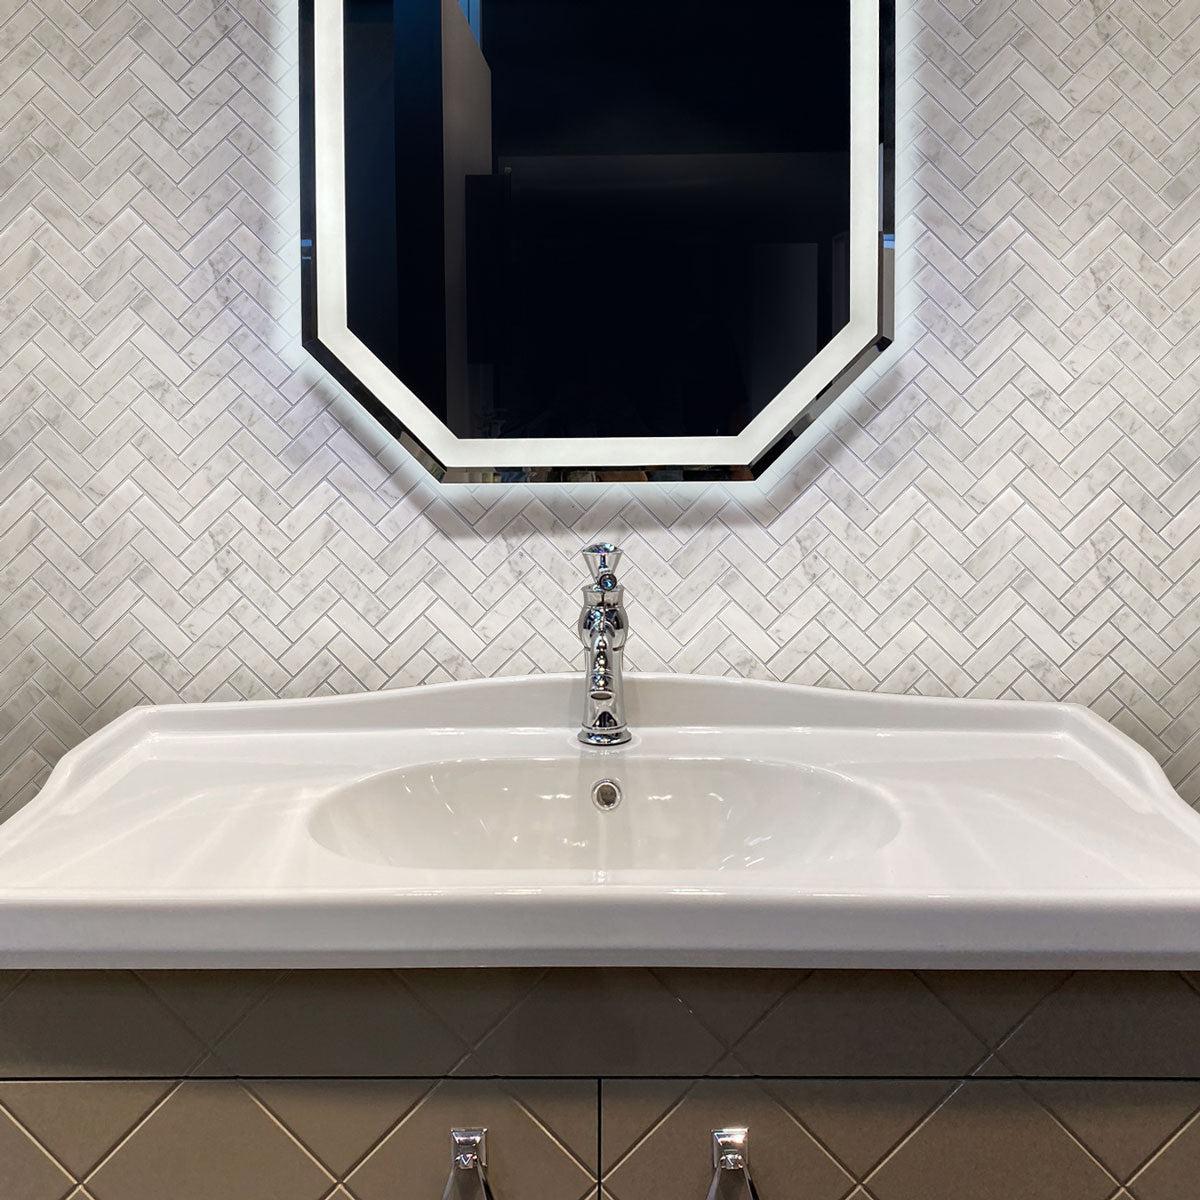 Carrara marble bathroom wall tile with a herringbone pattern